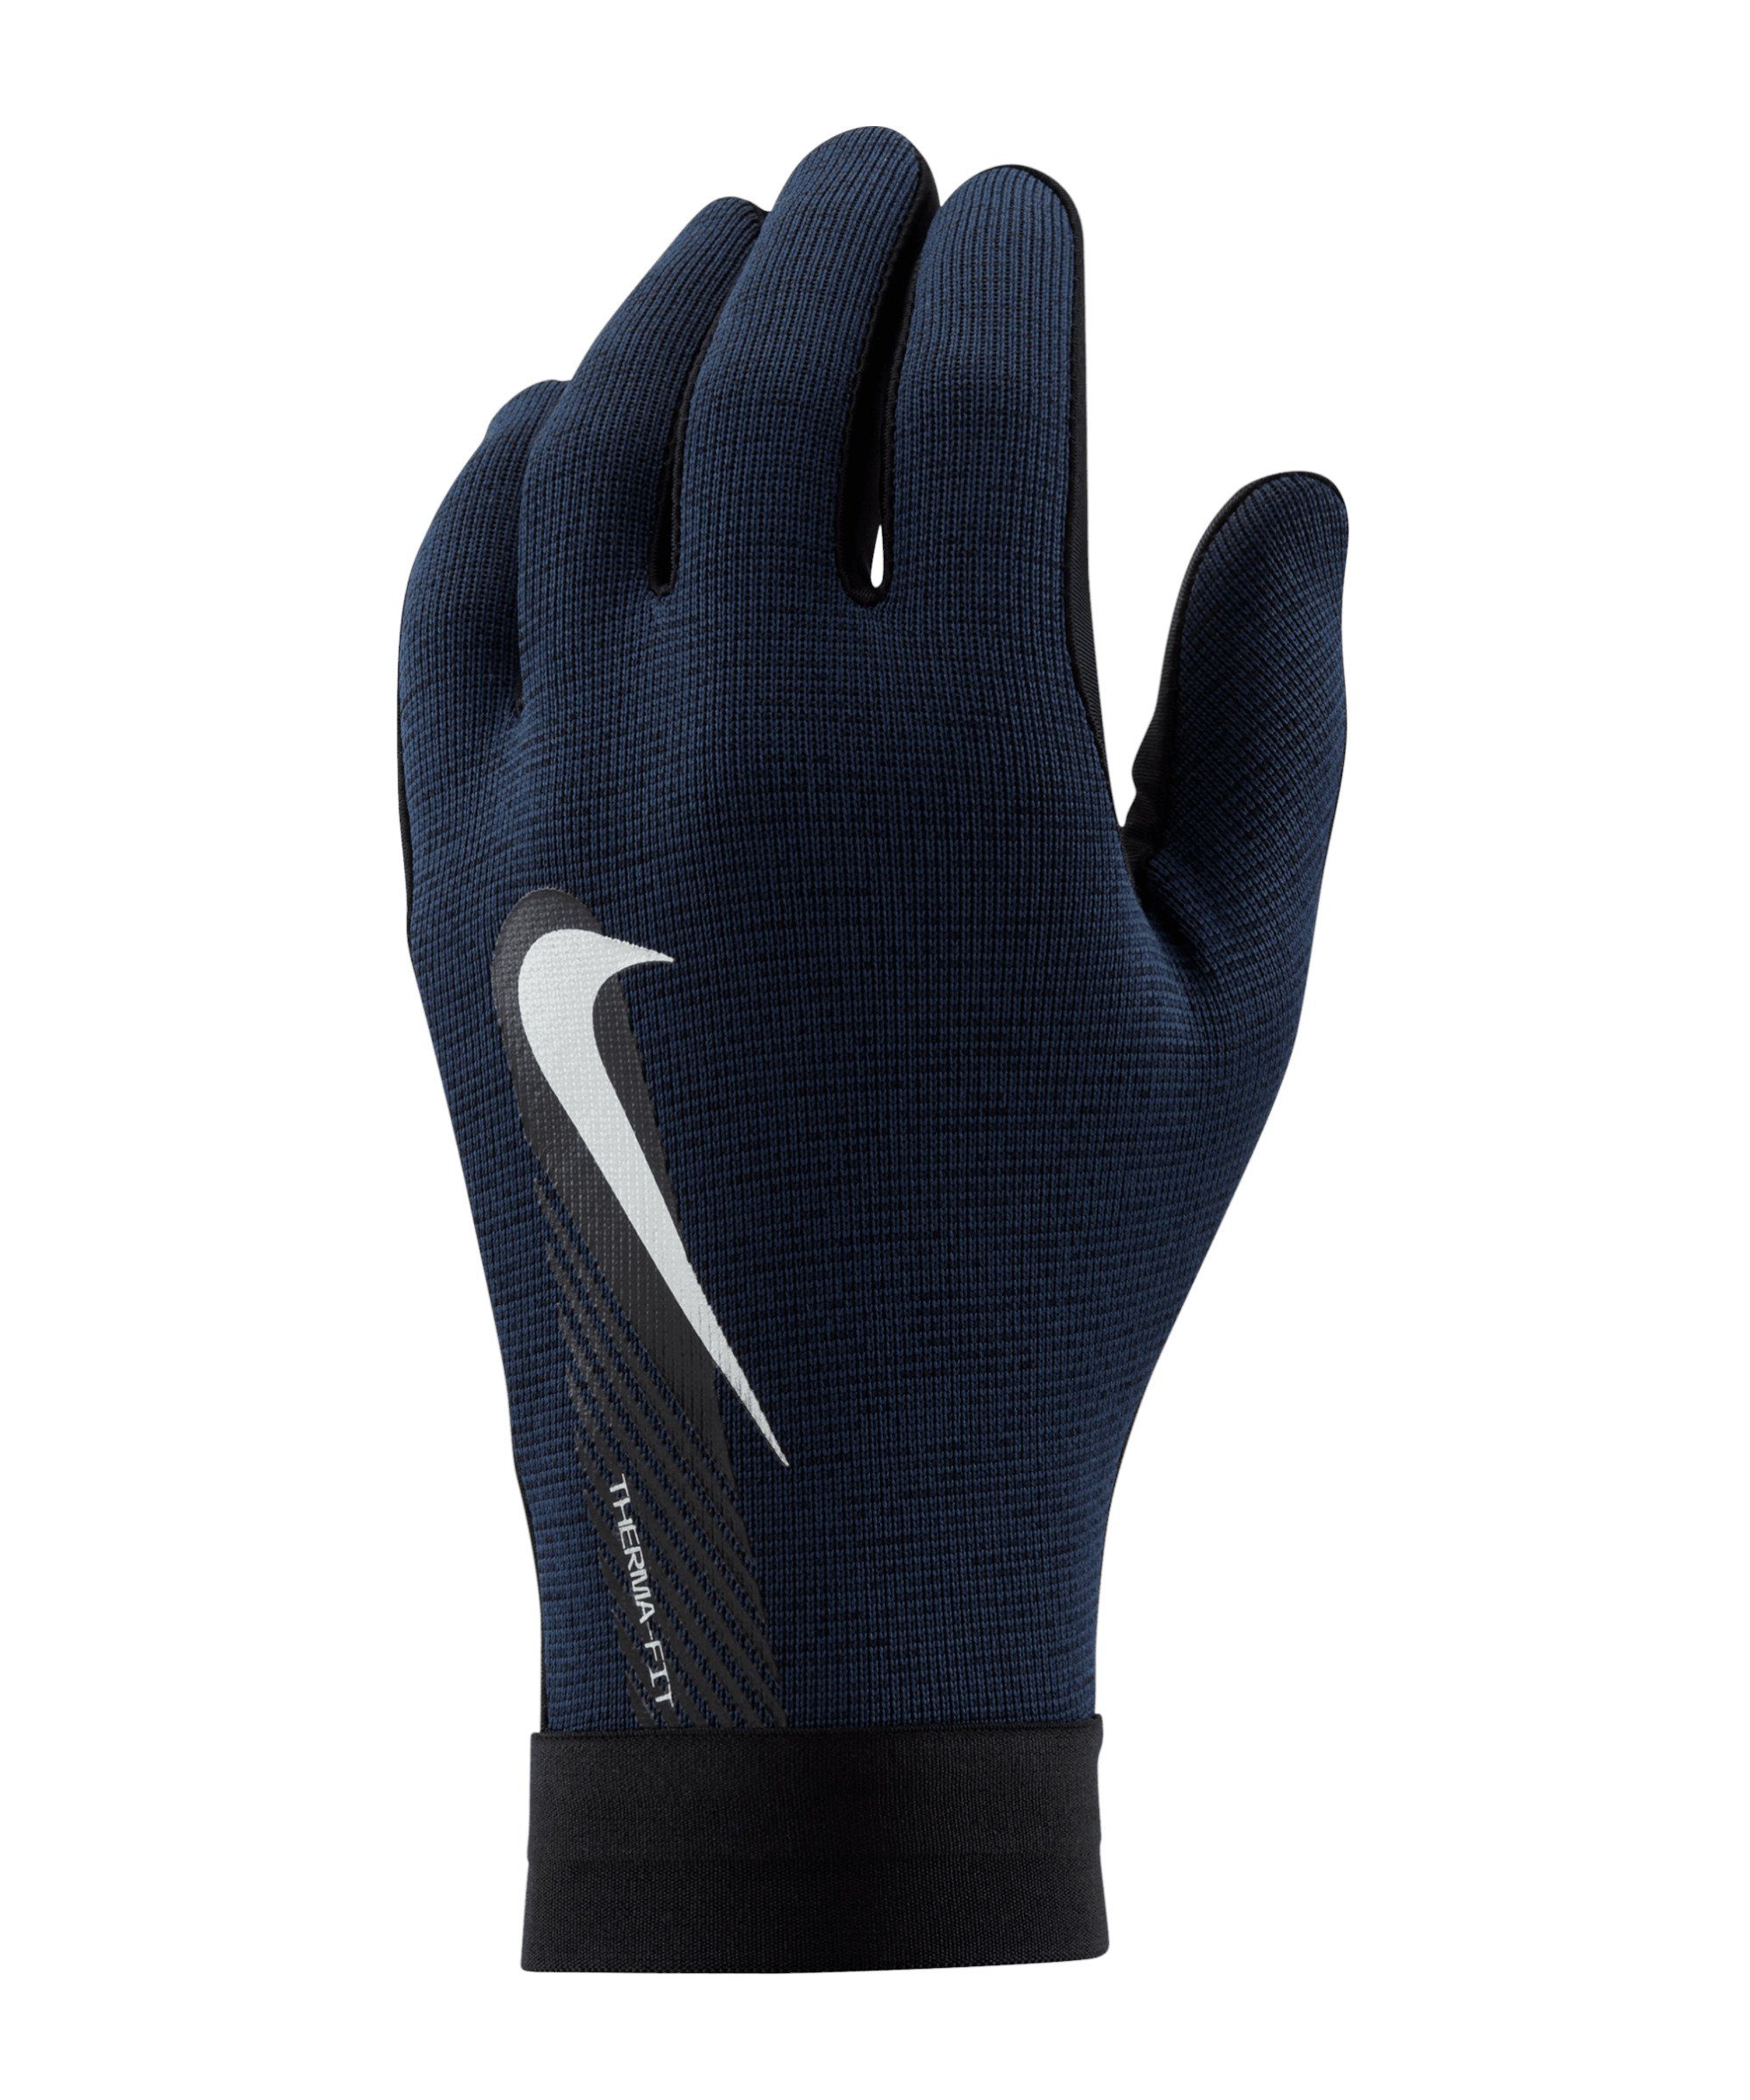 Nike Feldspielerhandschuhe Academy Therma-FIT Spielerhandschuh Kids schwarzblau